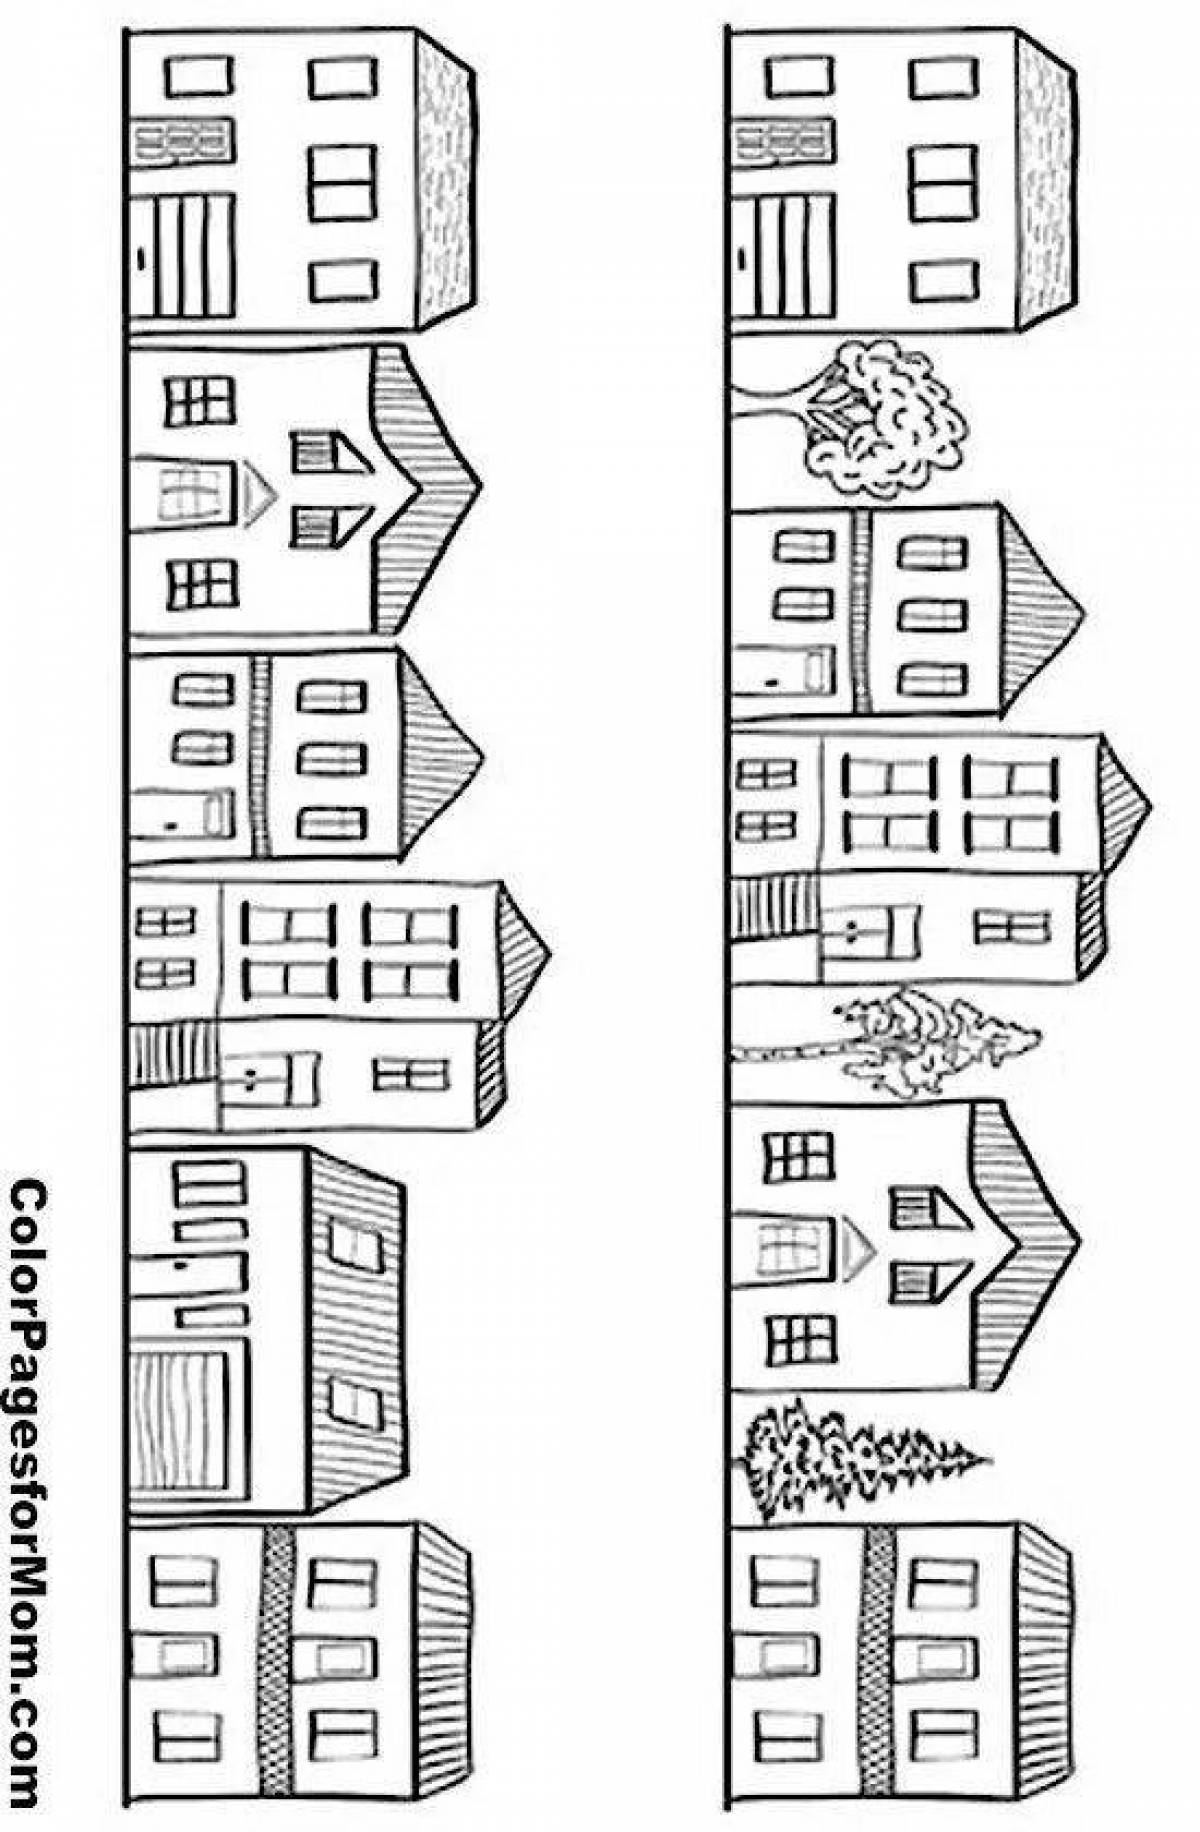 Multi-storey houses #4